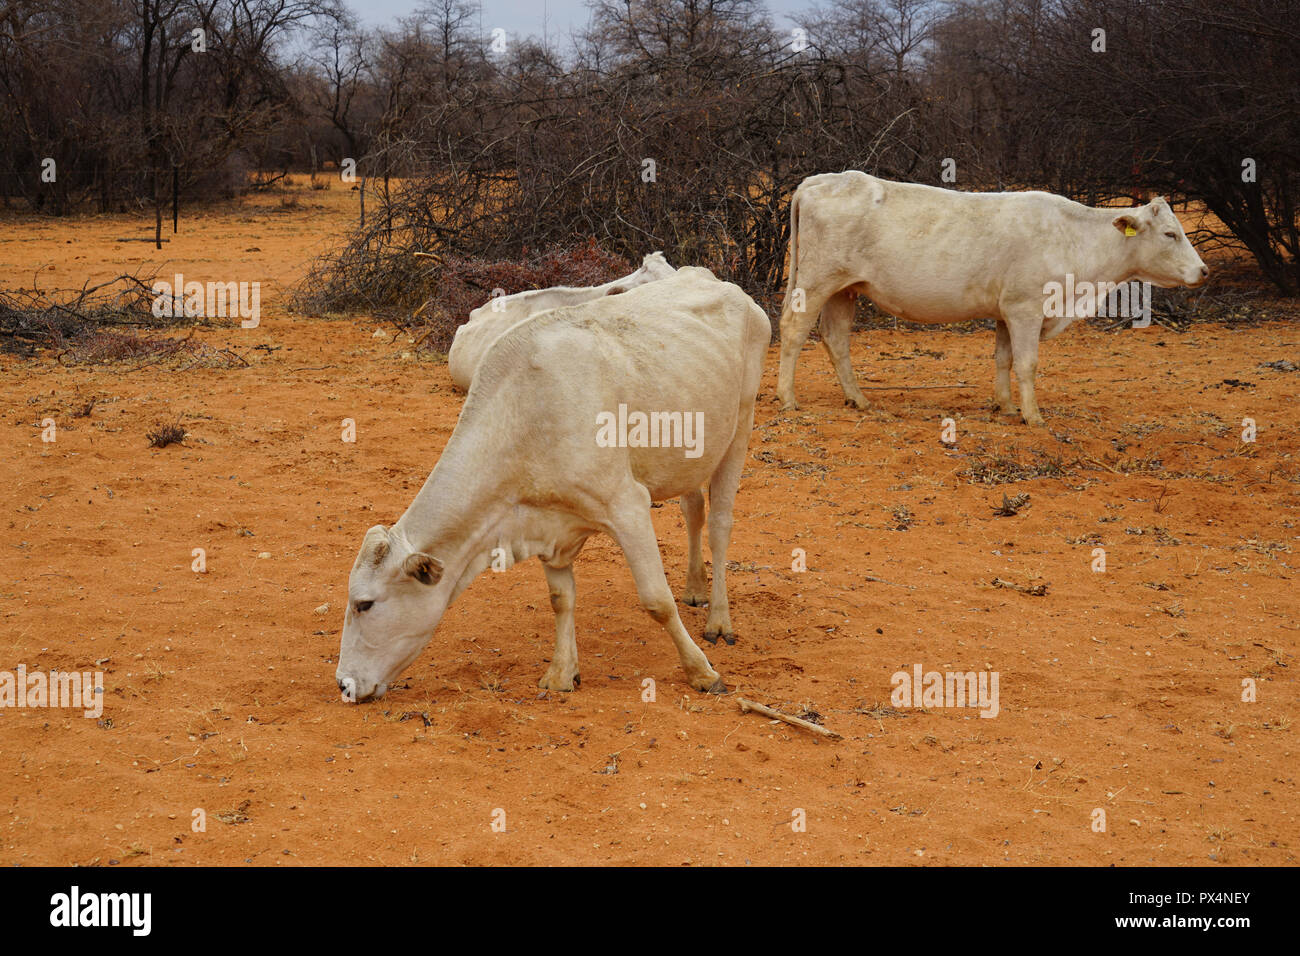 Zwei weiße Kühe stehen am Straßenrand, Namibia, Strasse D2512, Namibia, Afrika Foto Stock